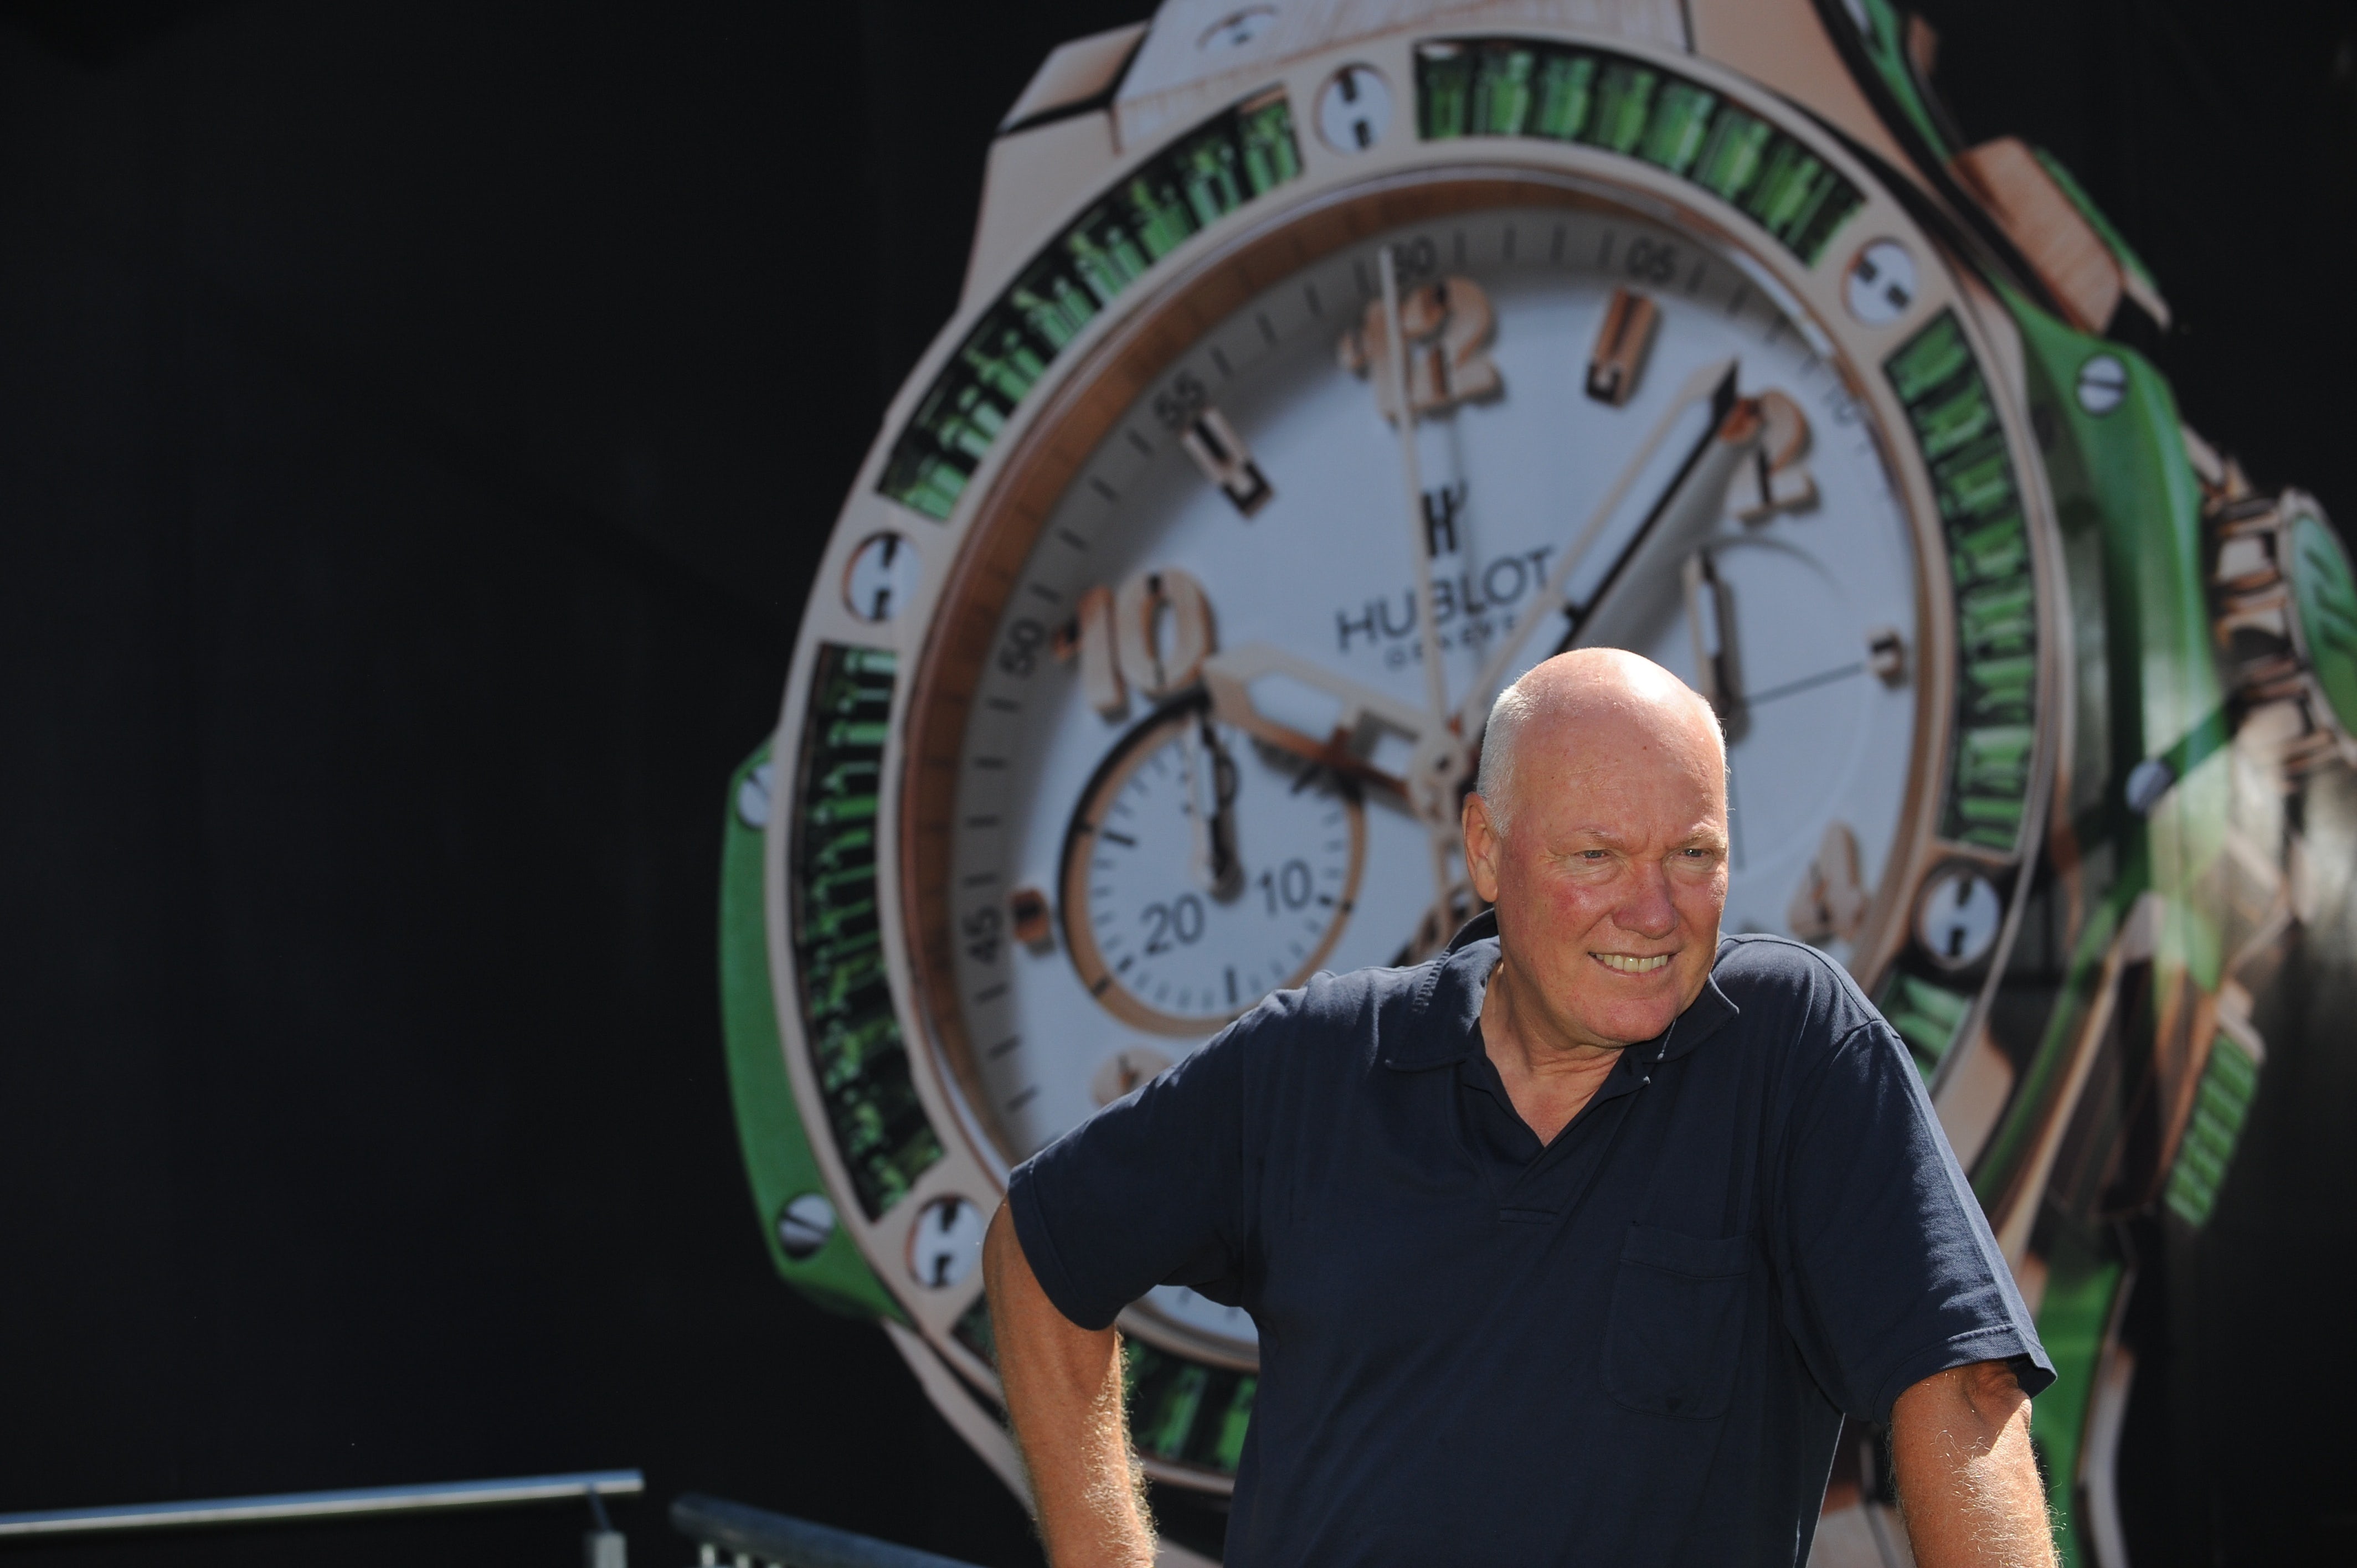 Jean-Claude Biver Becomes Interim CEO Of Zenith Watches As Magada Departs